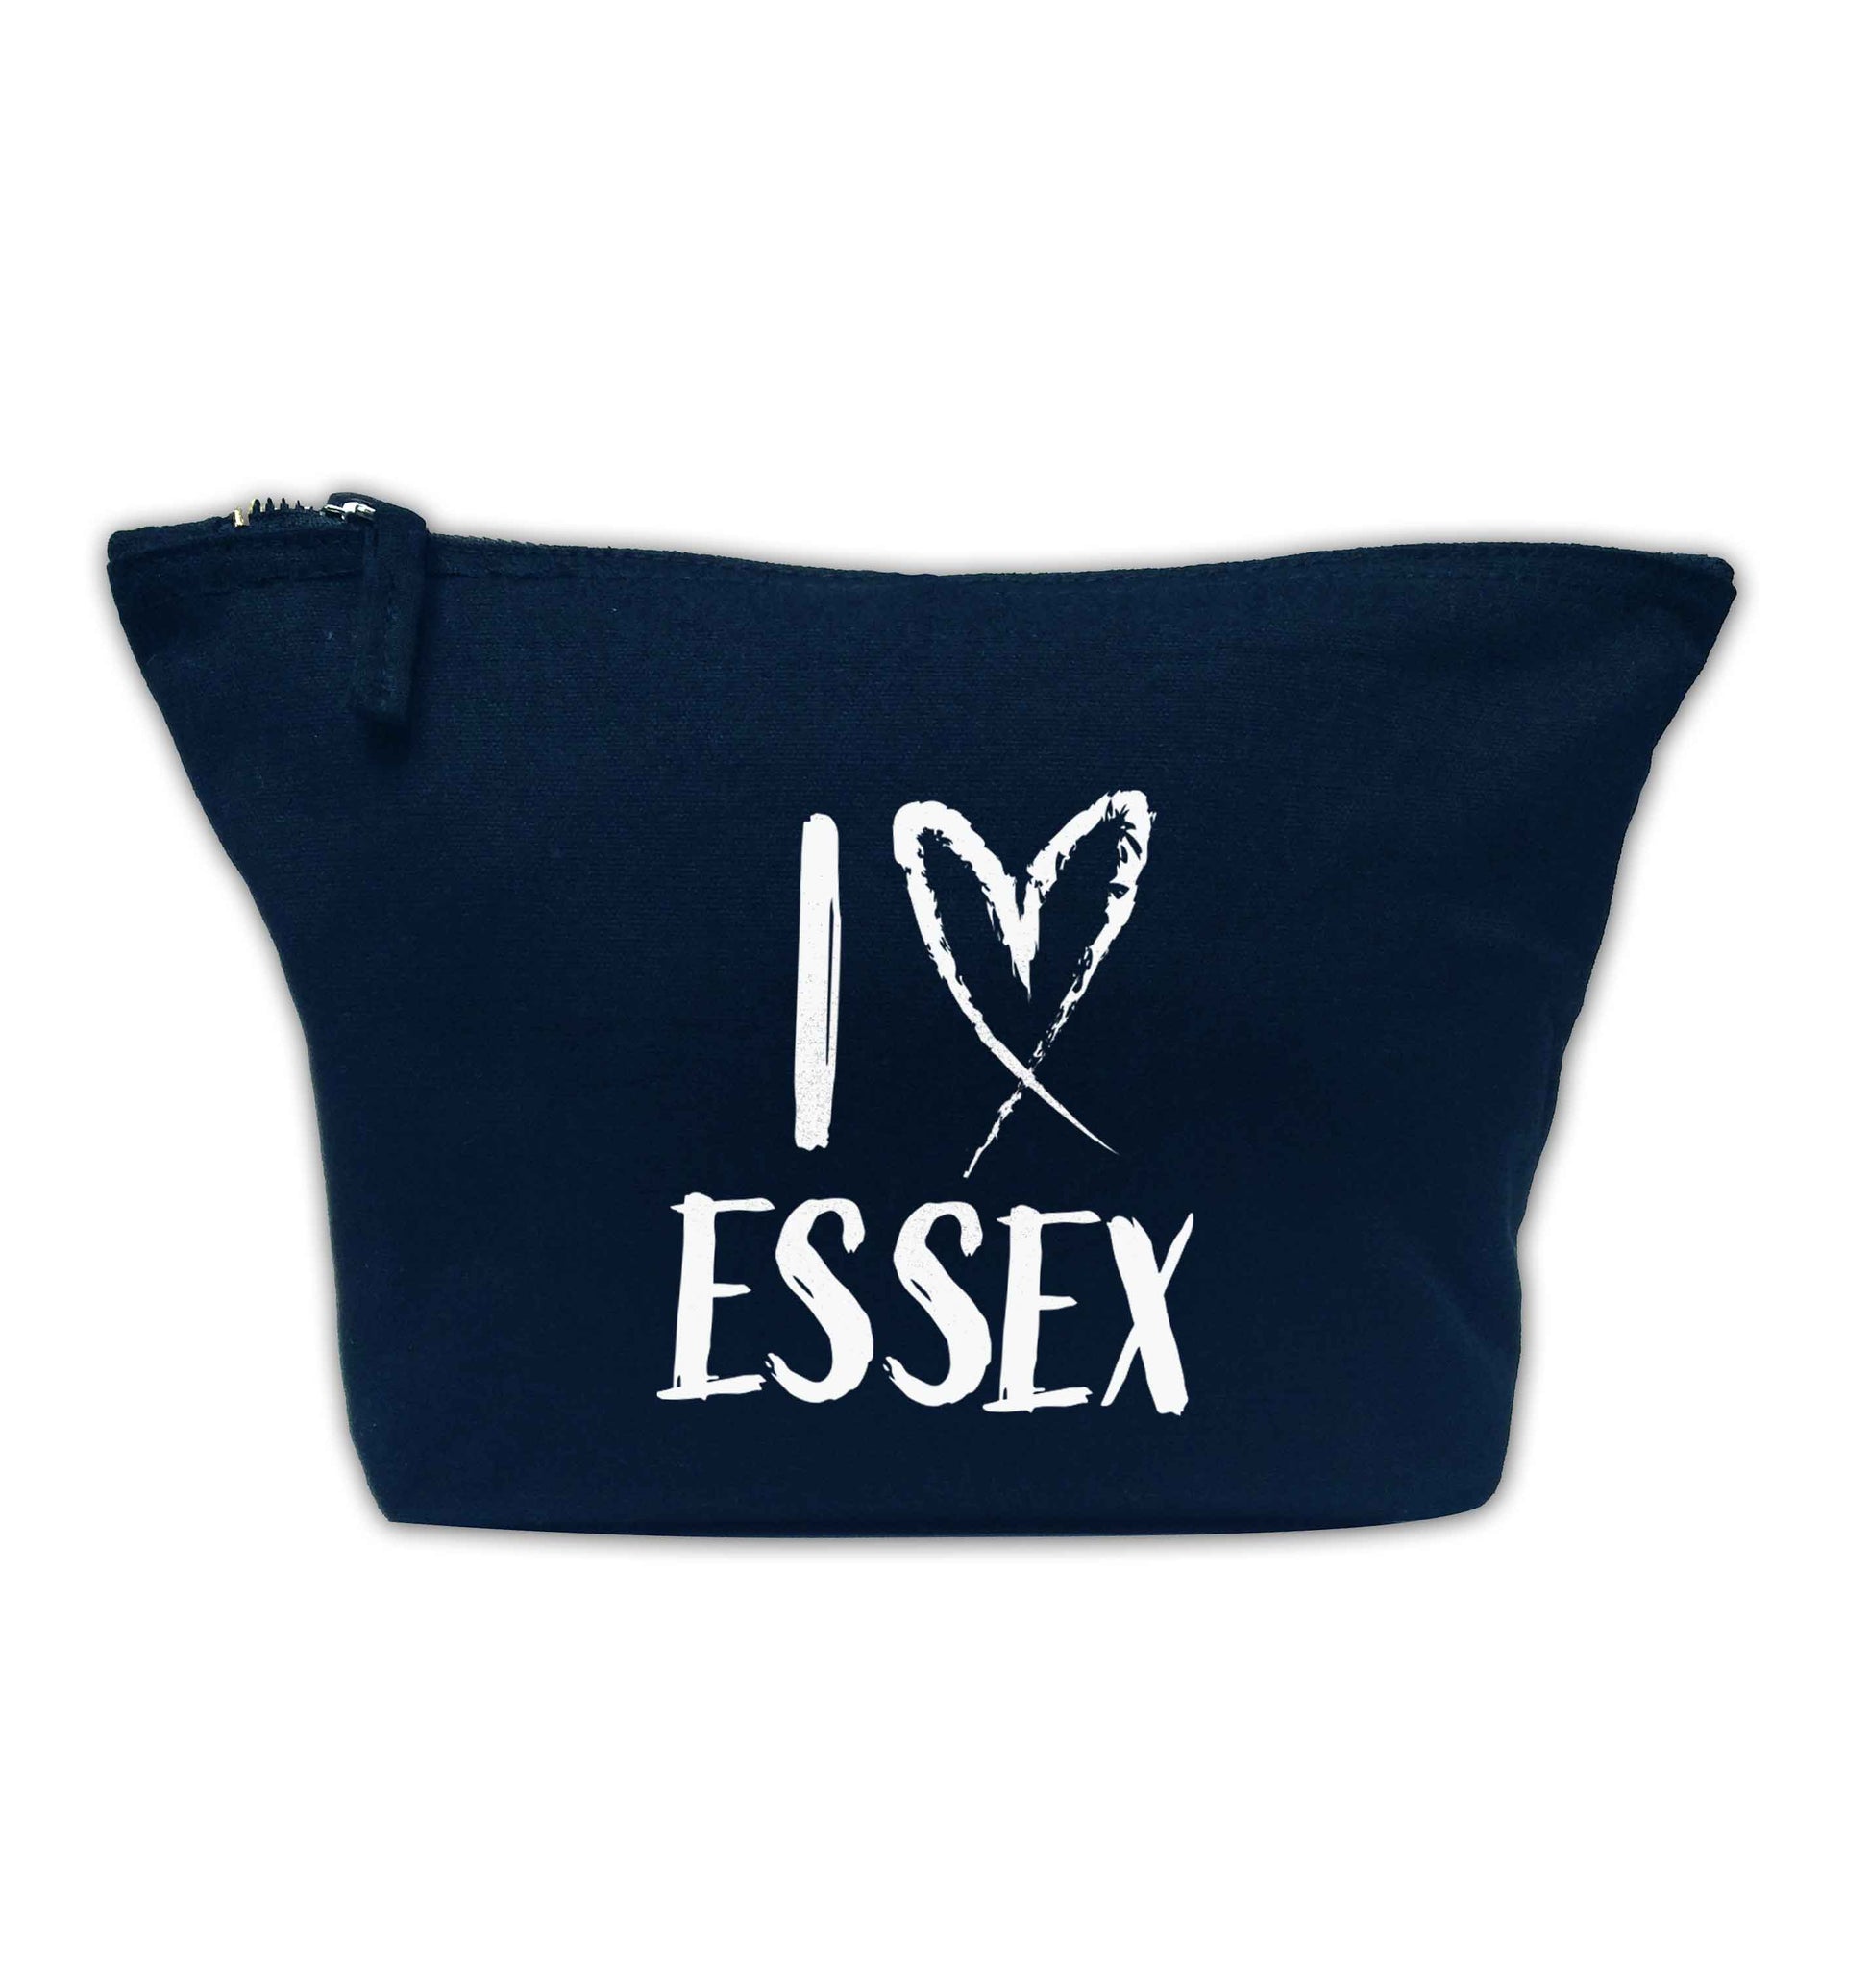 I love Essex navy makeup bag